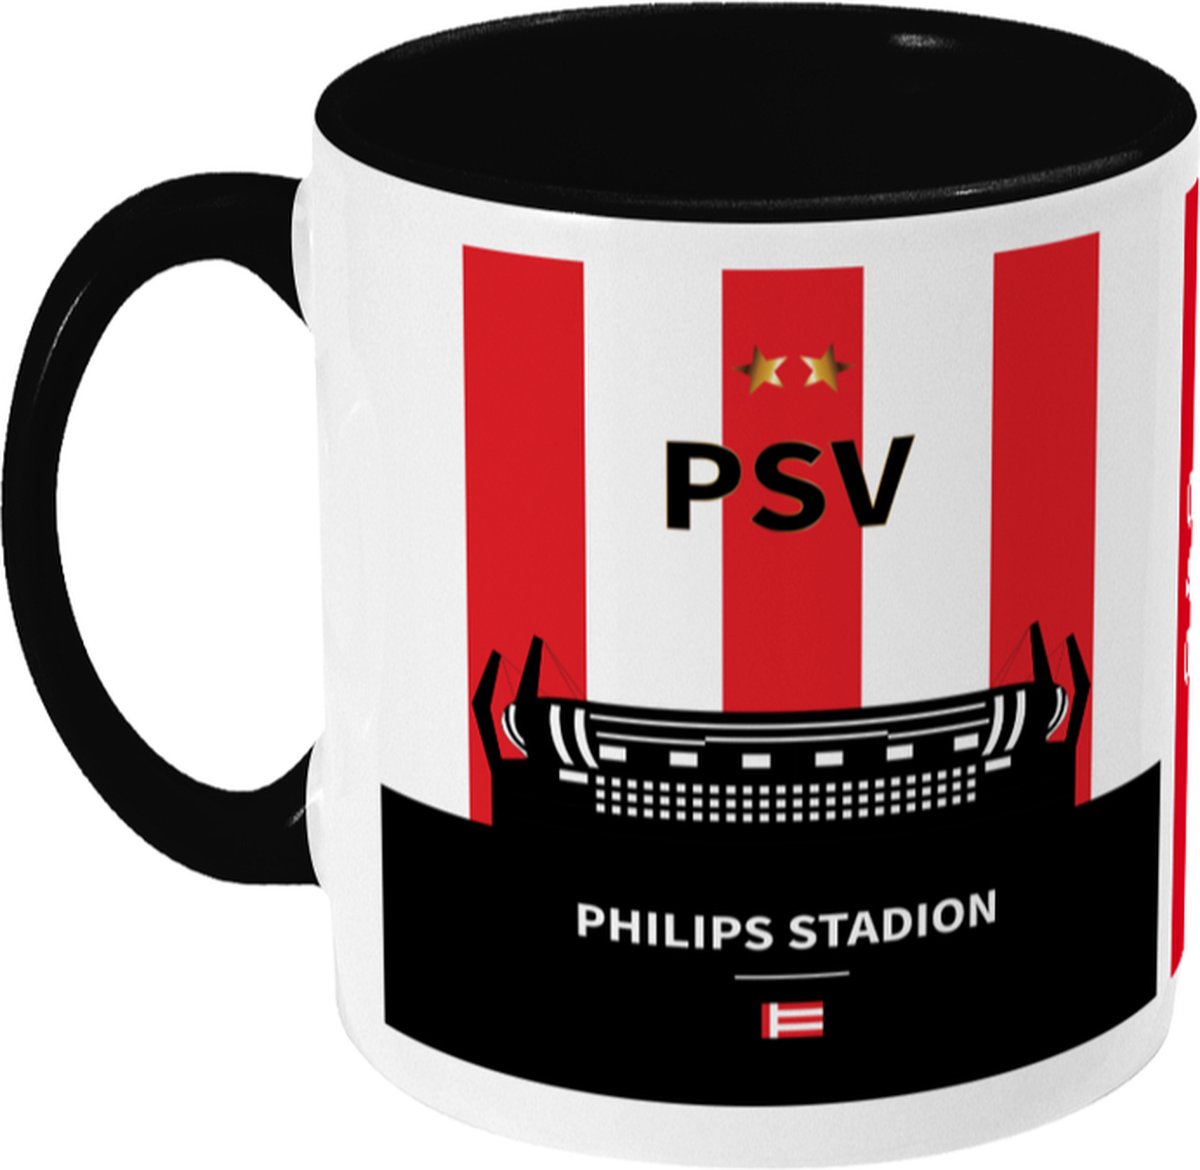 PSV Mok - Philips Stadion - Koffiemok - Eindhoven - 040 - Voetbal - Beker - Koffiebeker - Theemok - Zwart - Limited Edition